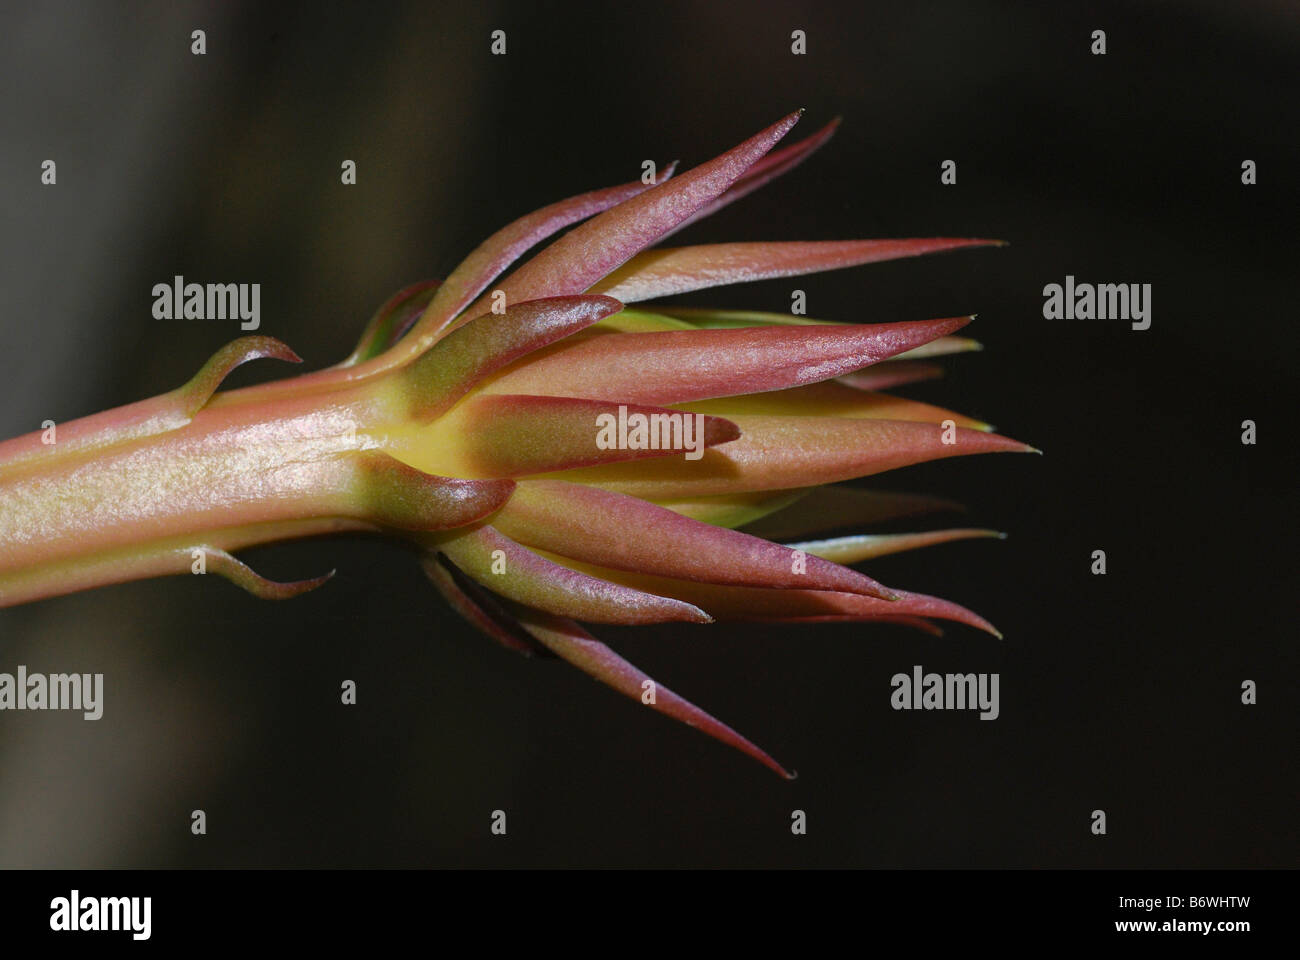 Bud of Epiphyllum oxypetalum, a night-blooming cactus flower Stock Photo